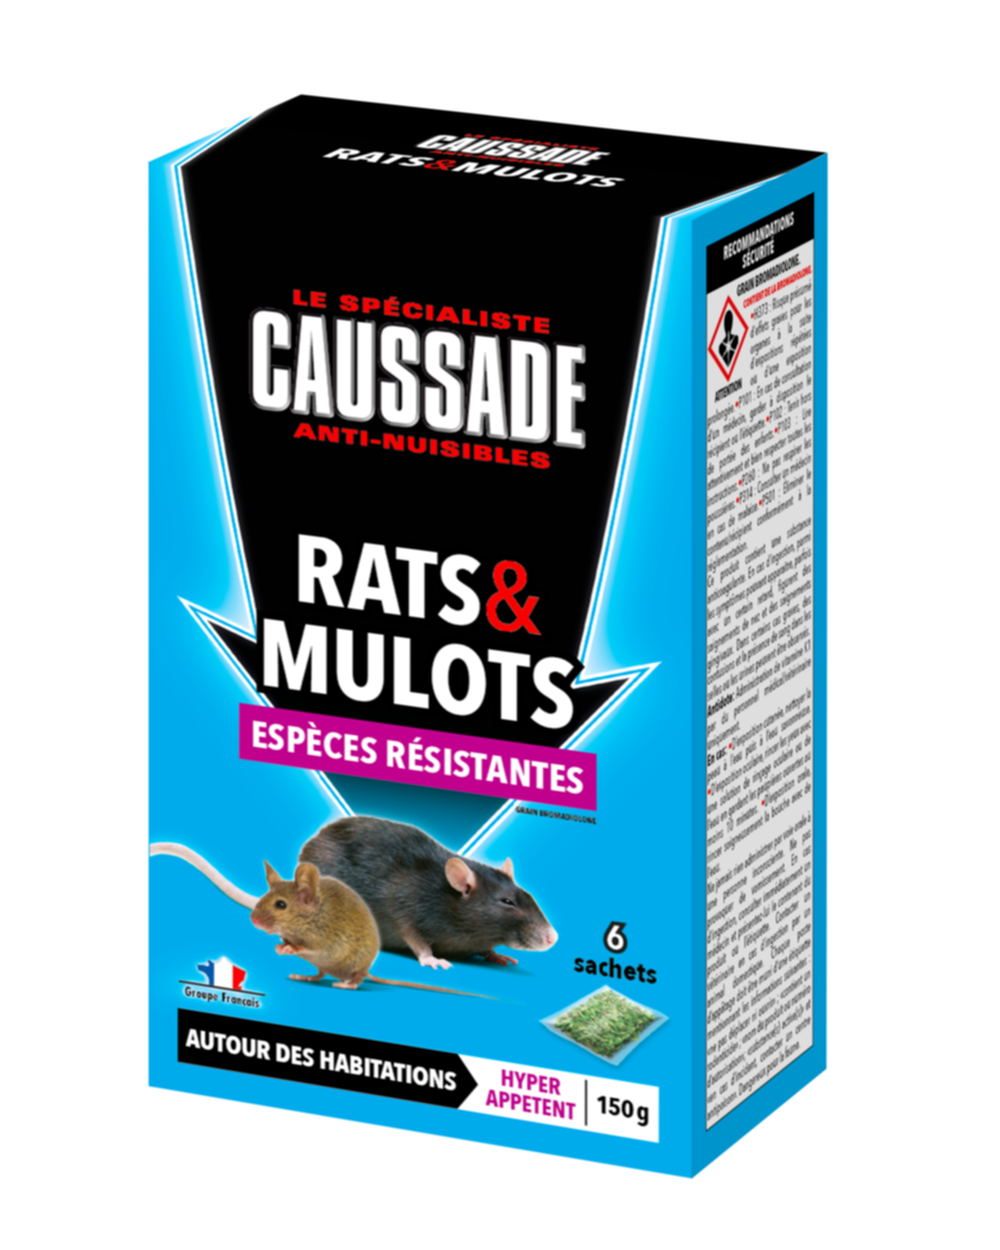 Traitement anti-nuisible grains rats&mulots 150gr - CAUSSADE